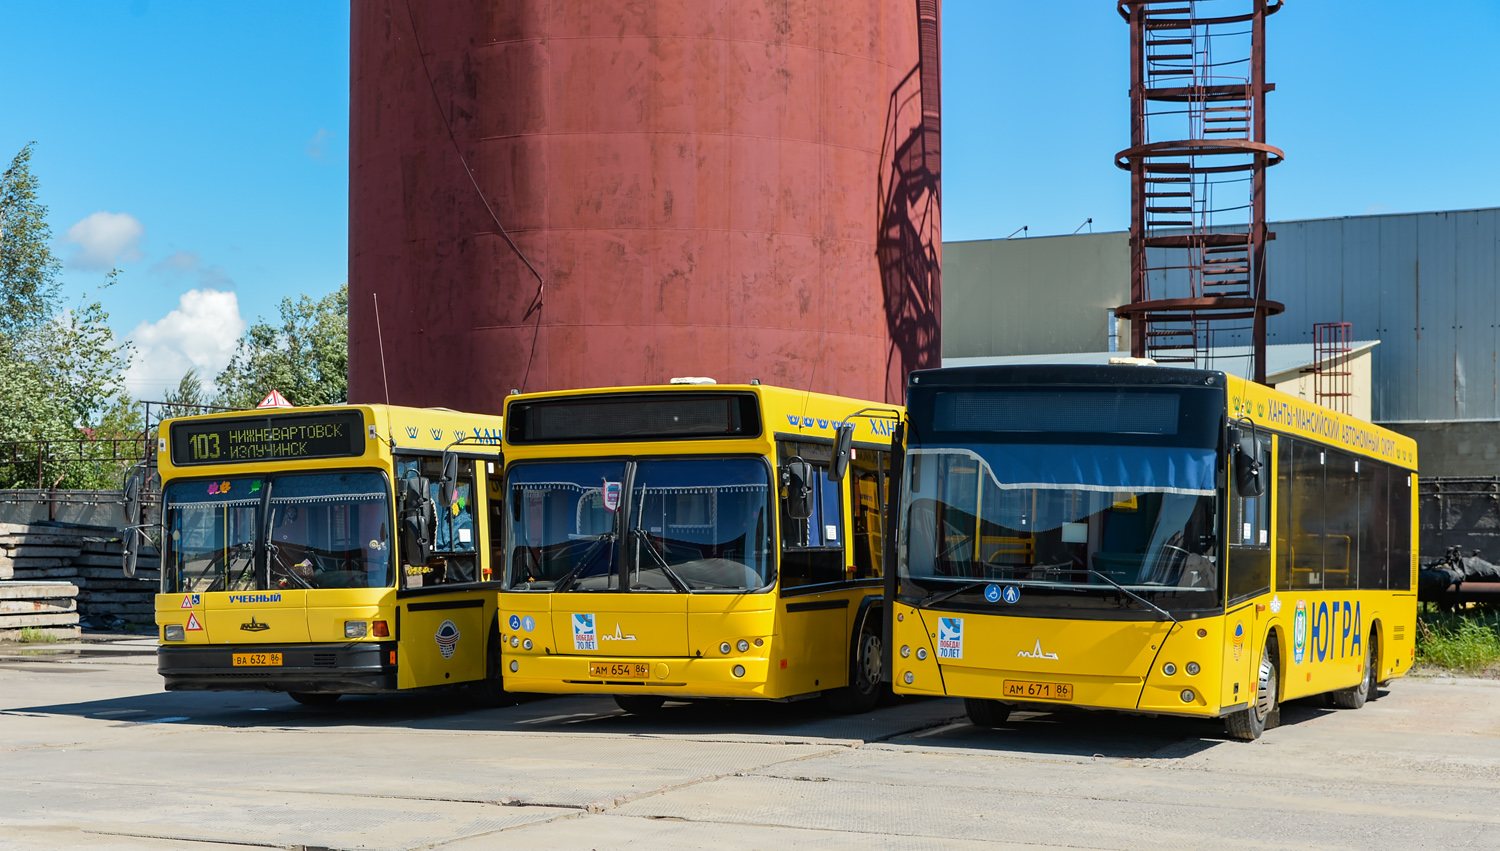 Khanty-Mansi AO, MAZ-206.067 Nr. АМ 671 86; Khanty-Mansi AO — Bus fleets